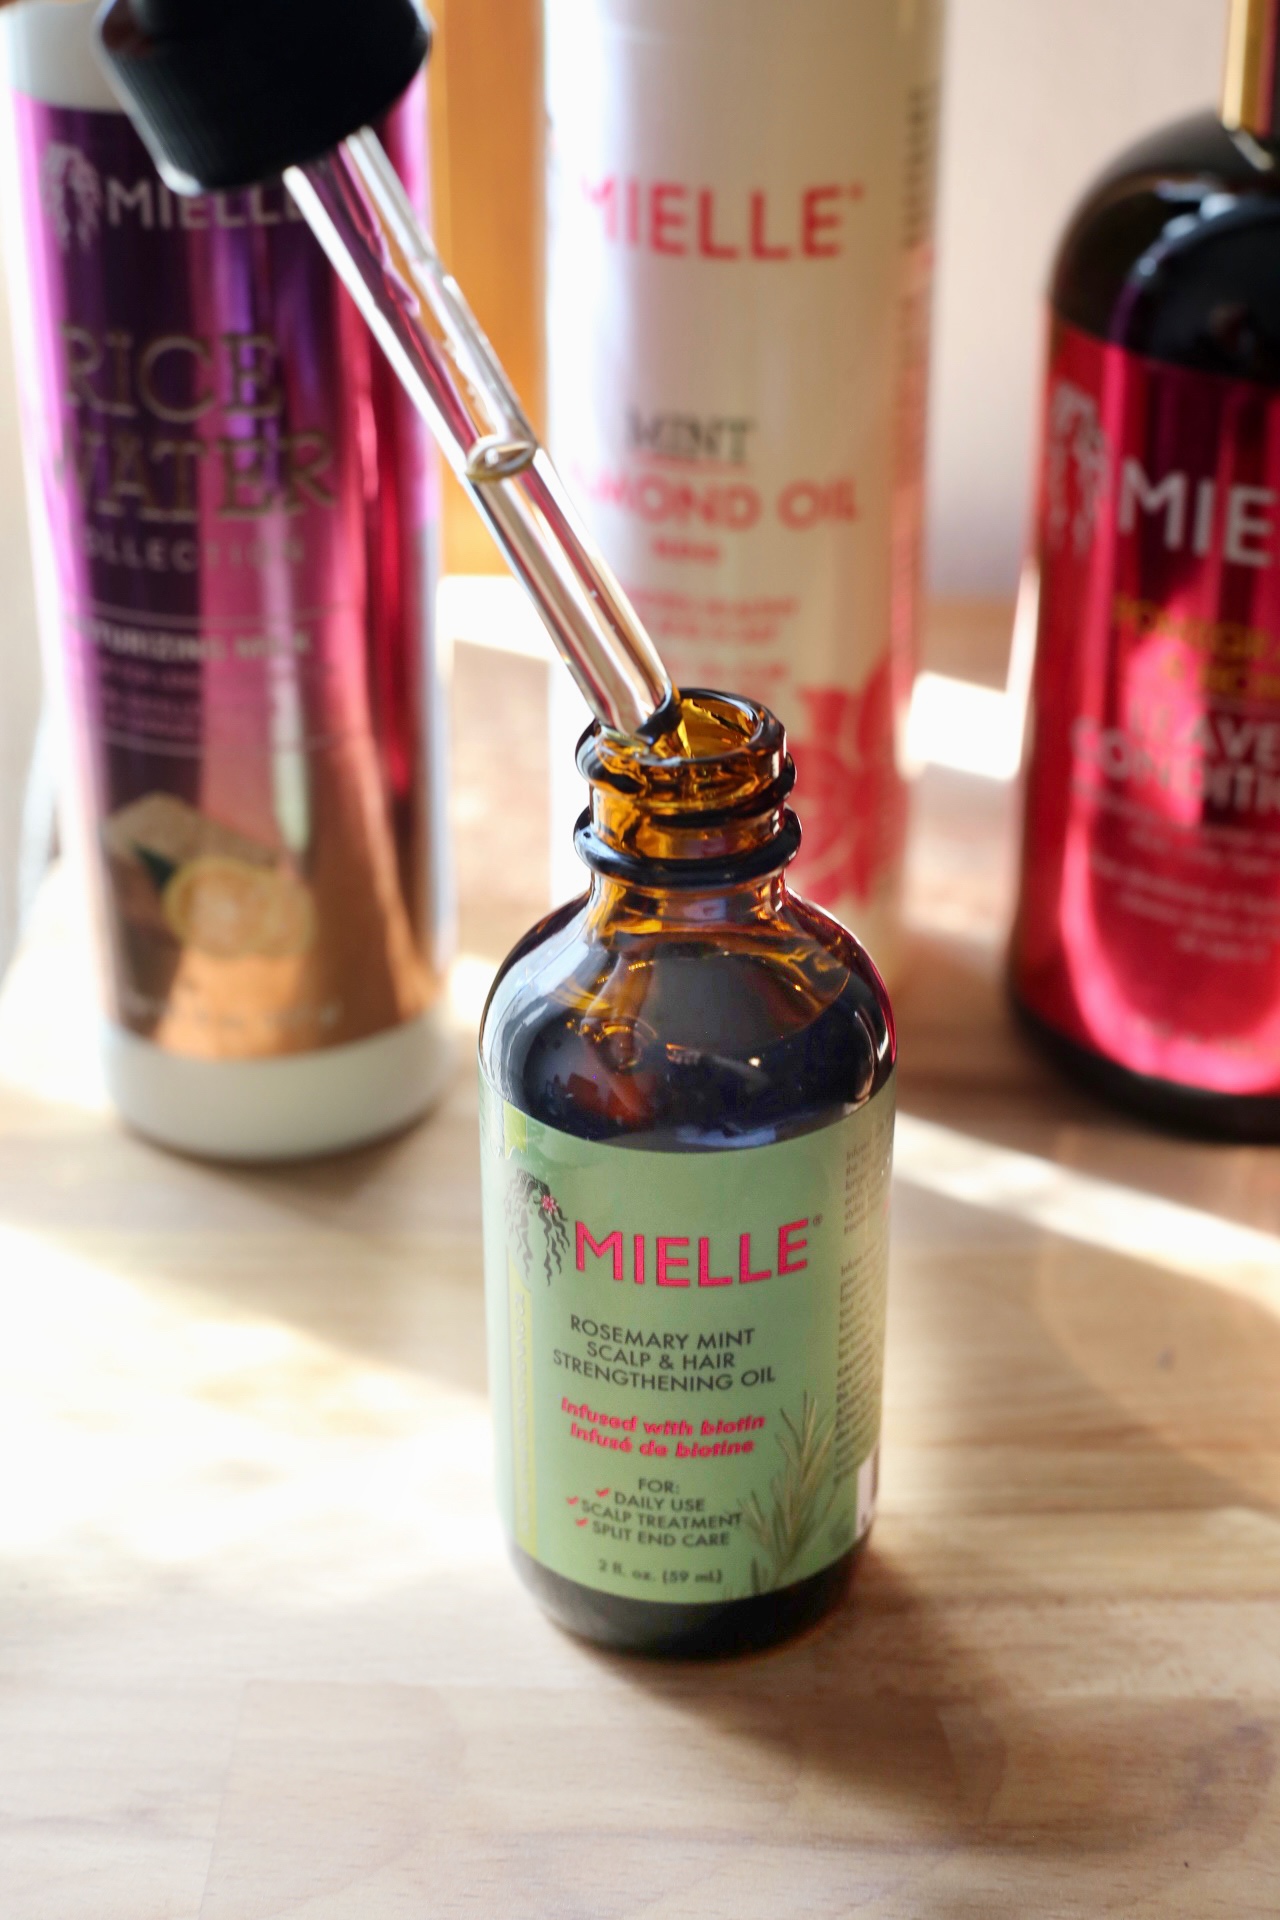 Mielle Organics Rosemary Mint Scalp and Hair Strengthening Oil